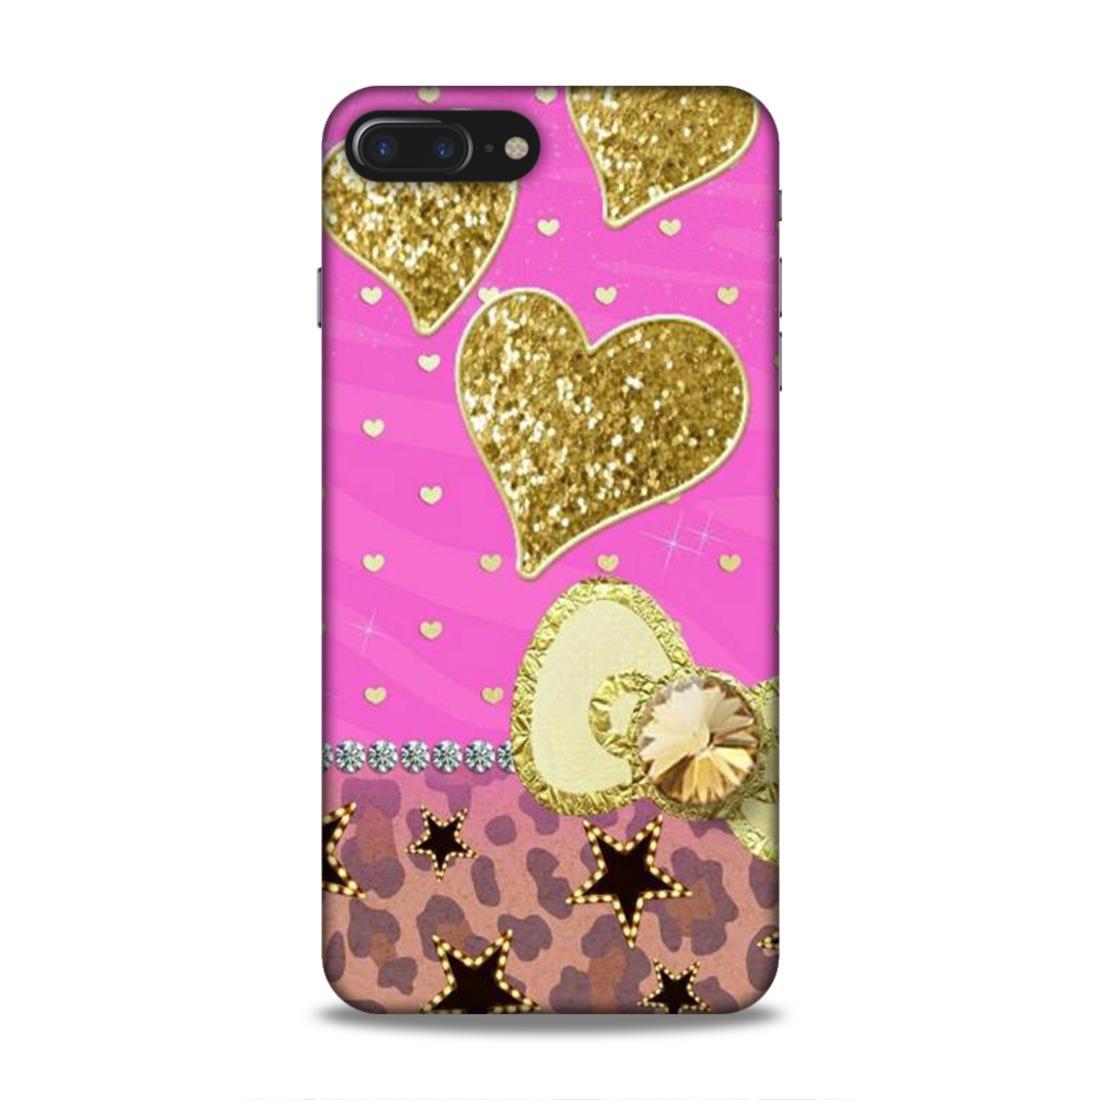 Cute Pink Heart iPhone 8 Plus Phone Case Cover